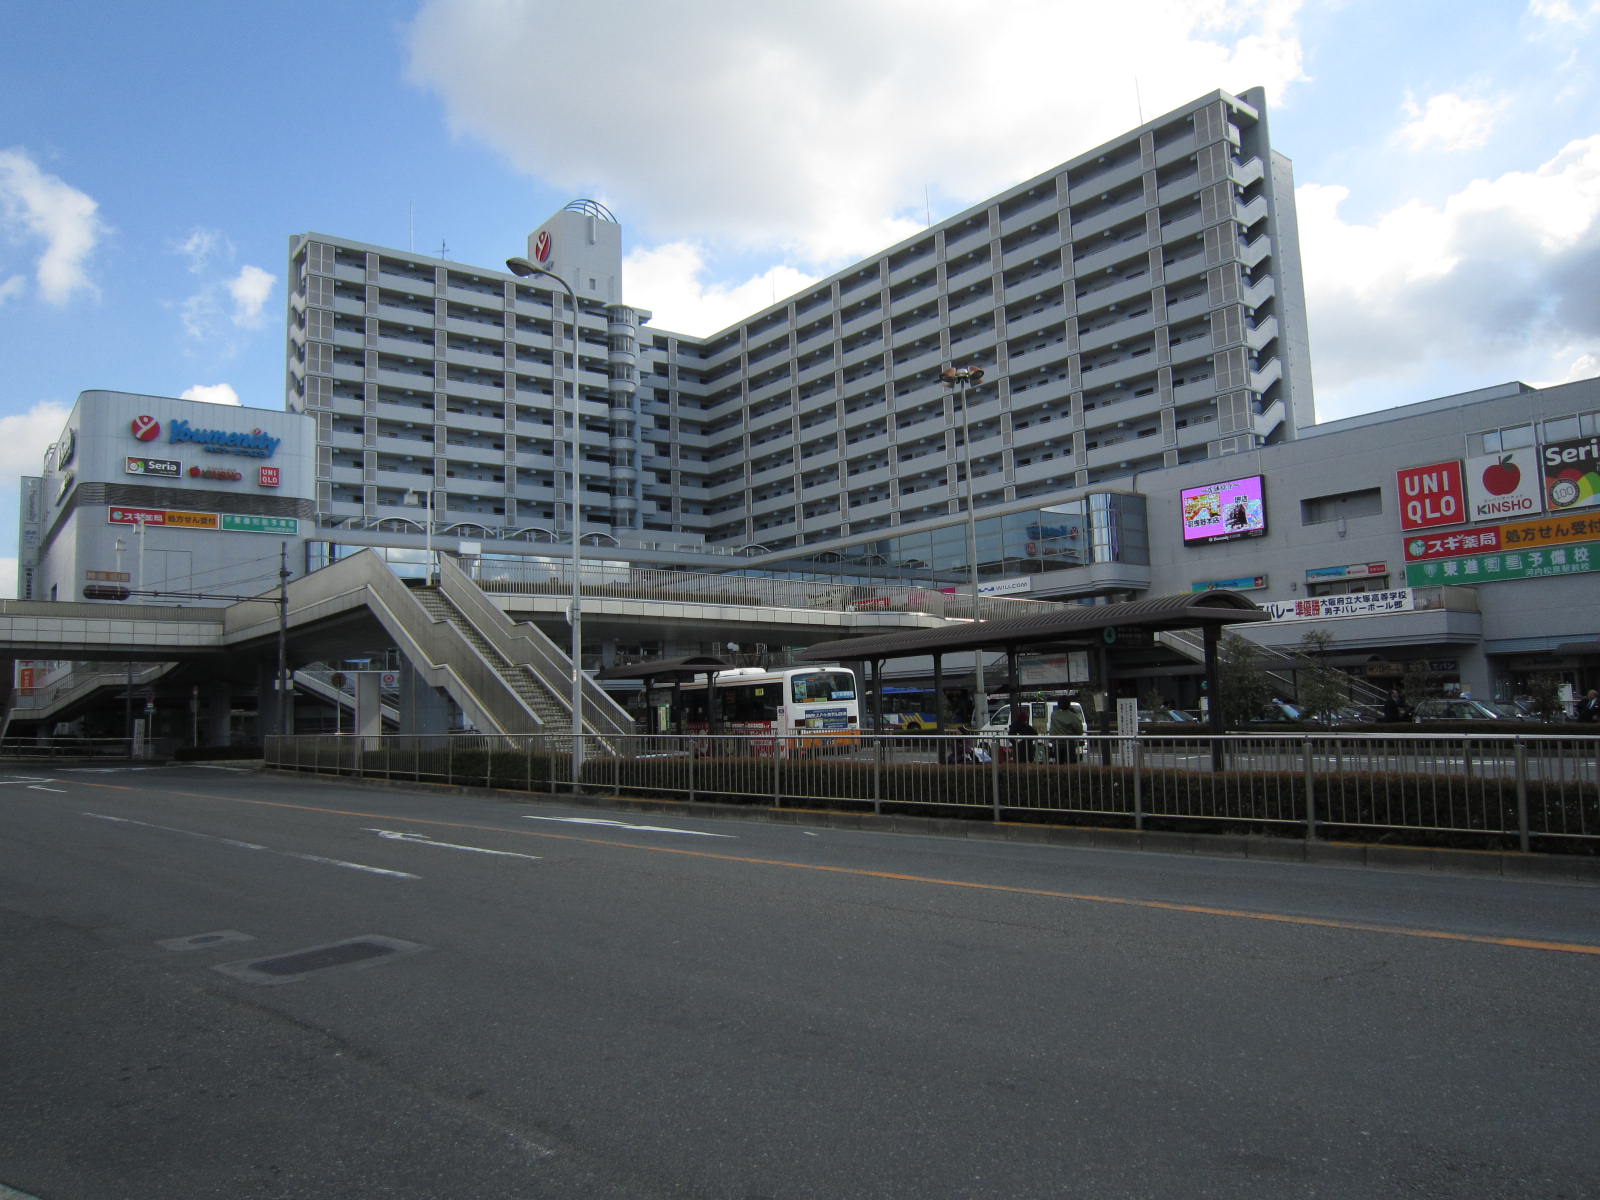 Shopping centre. Dream 1021m until sanity Matsubara (shopping center)